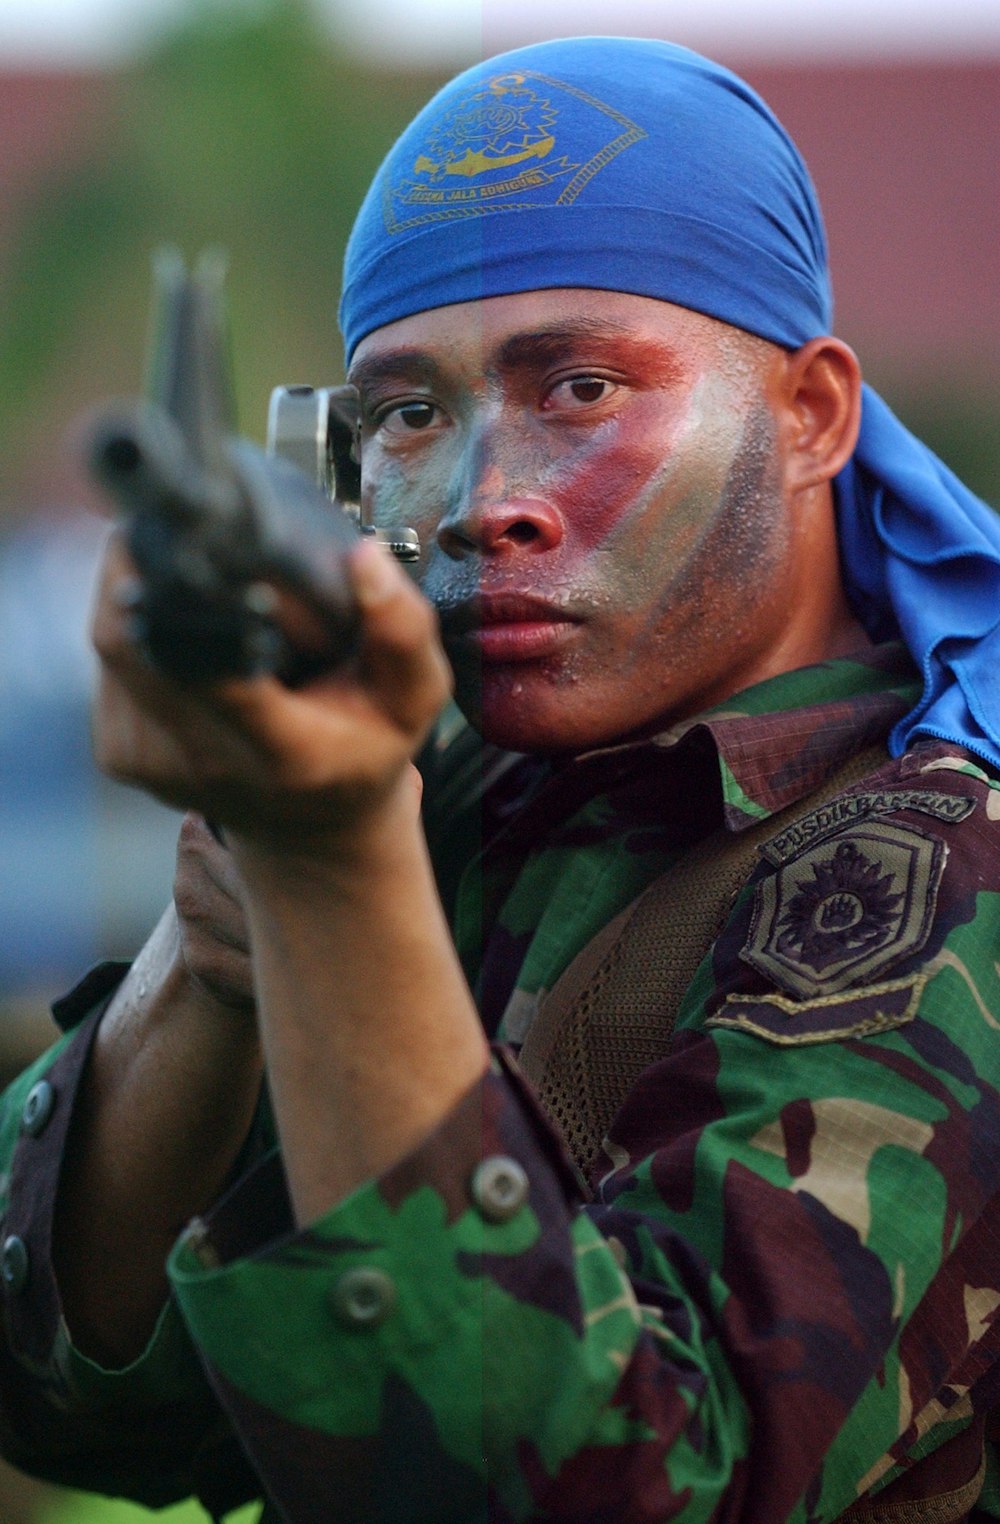 a man in a uniform holding a gun